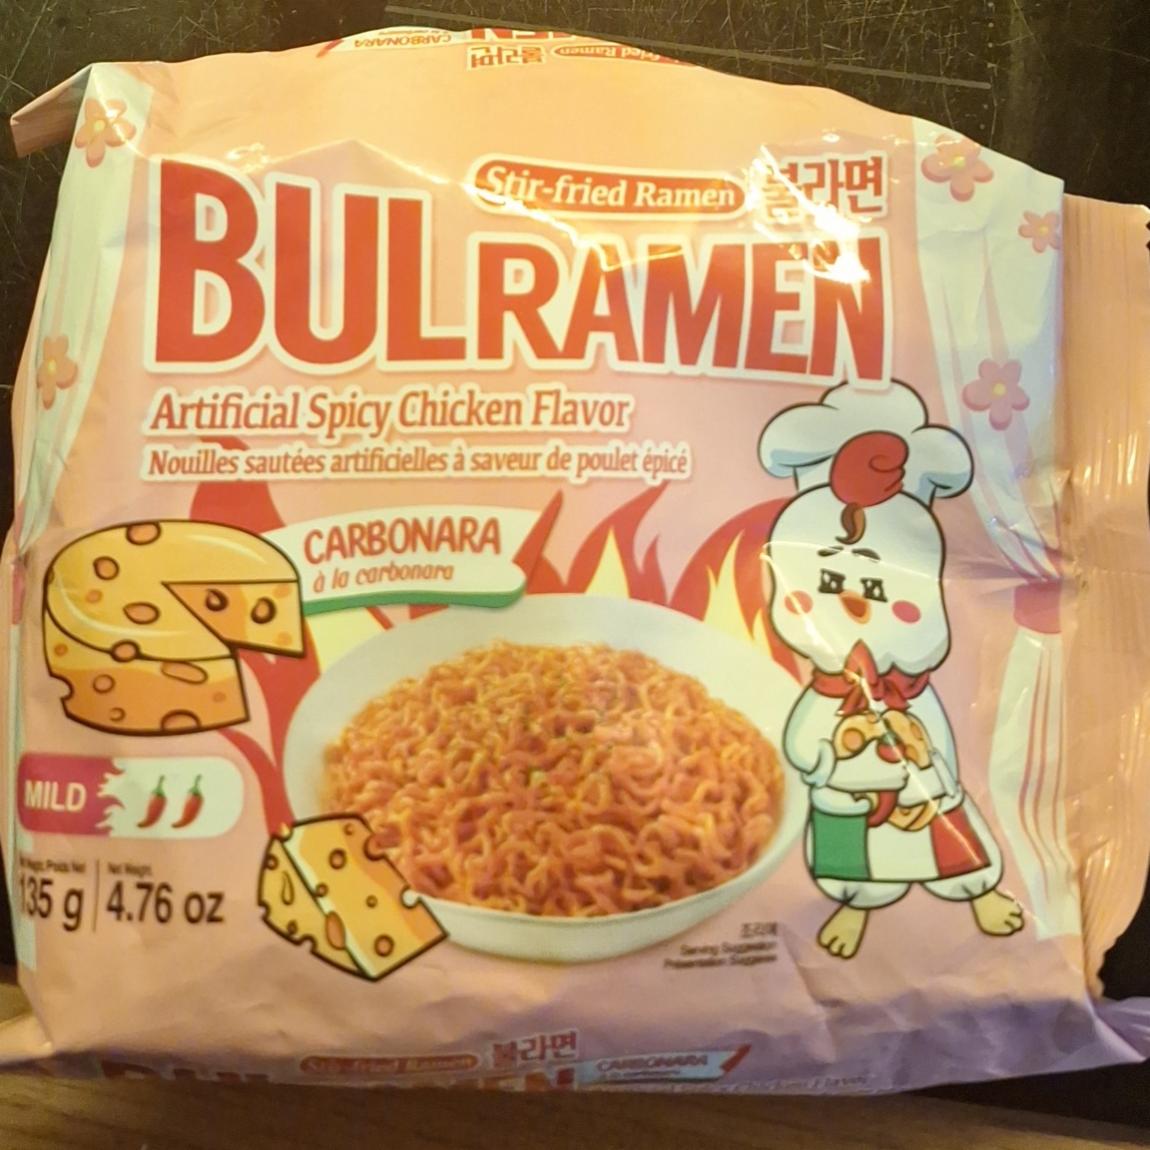 Fotografie - Bulramen stir-fried ramen carbonara artificial spicy chicken flavor